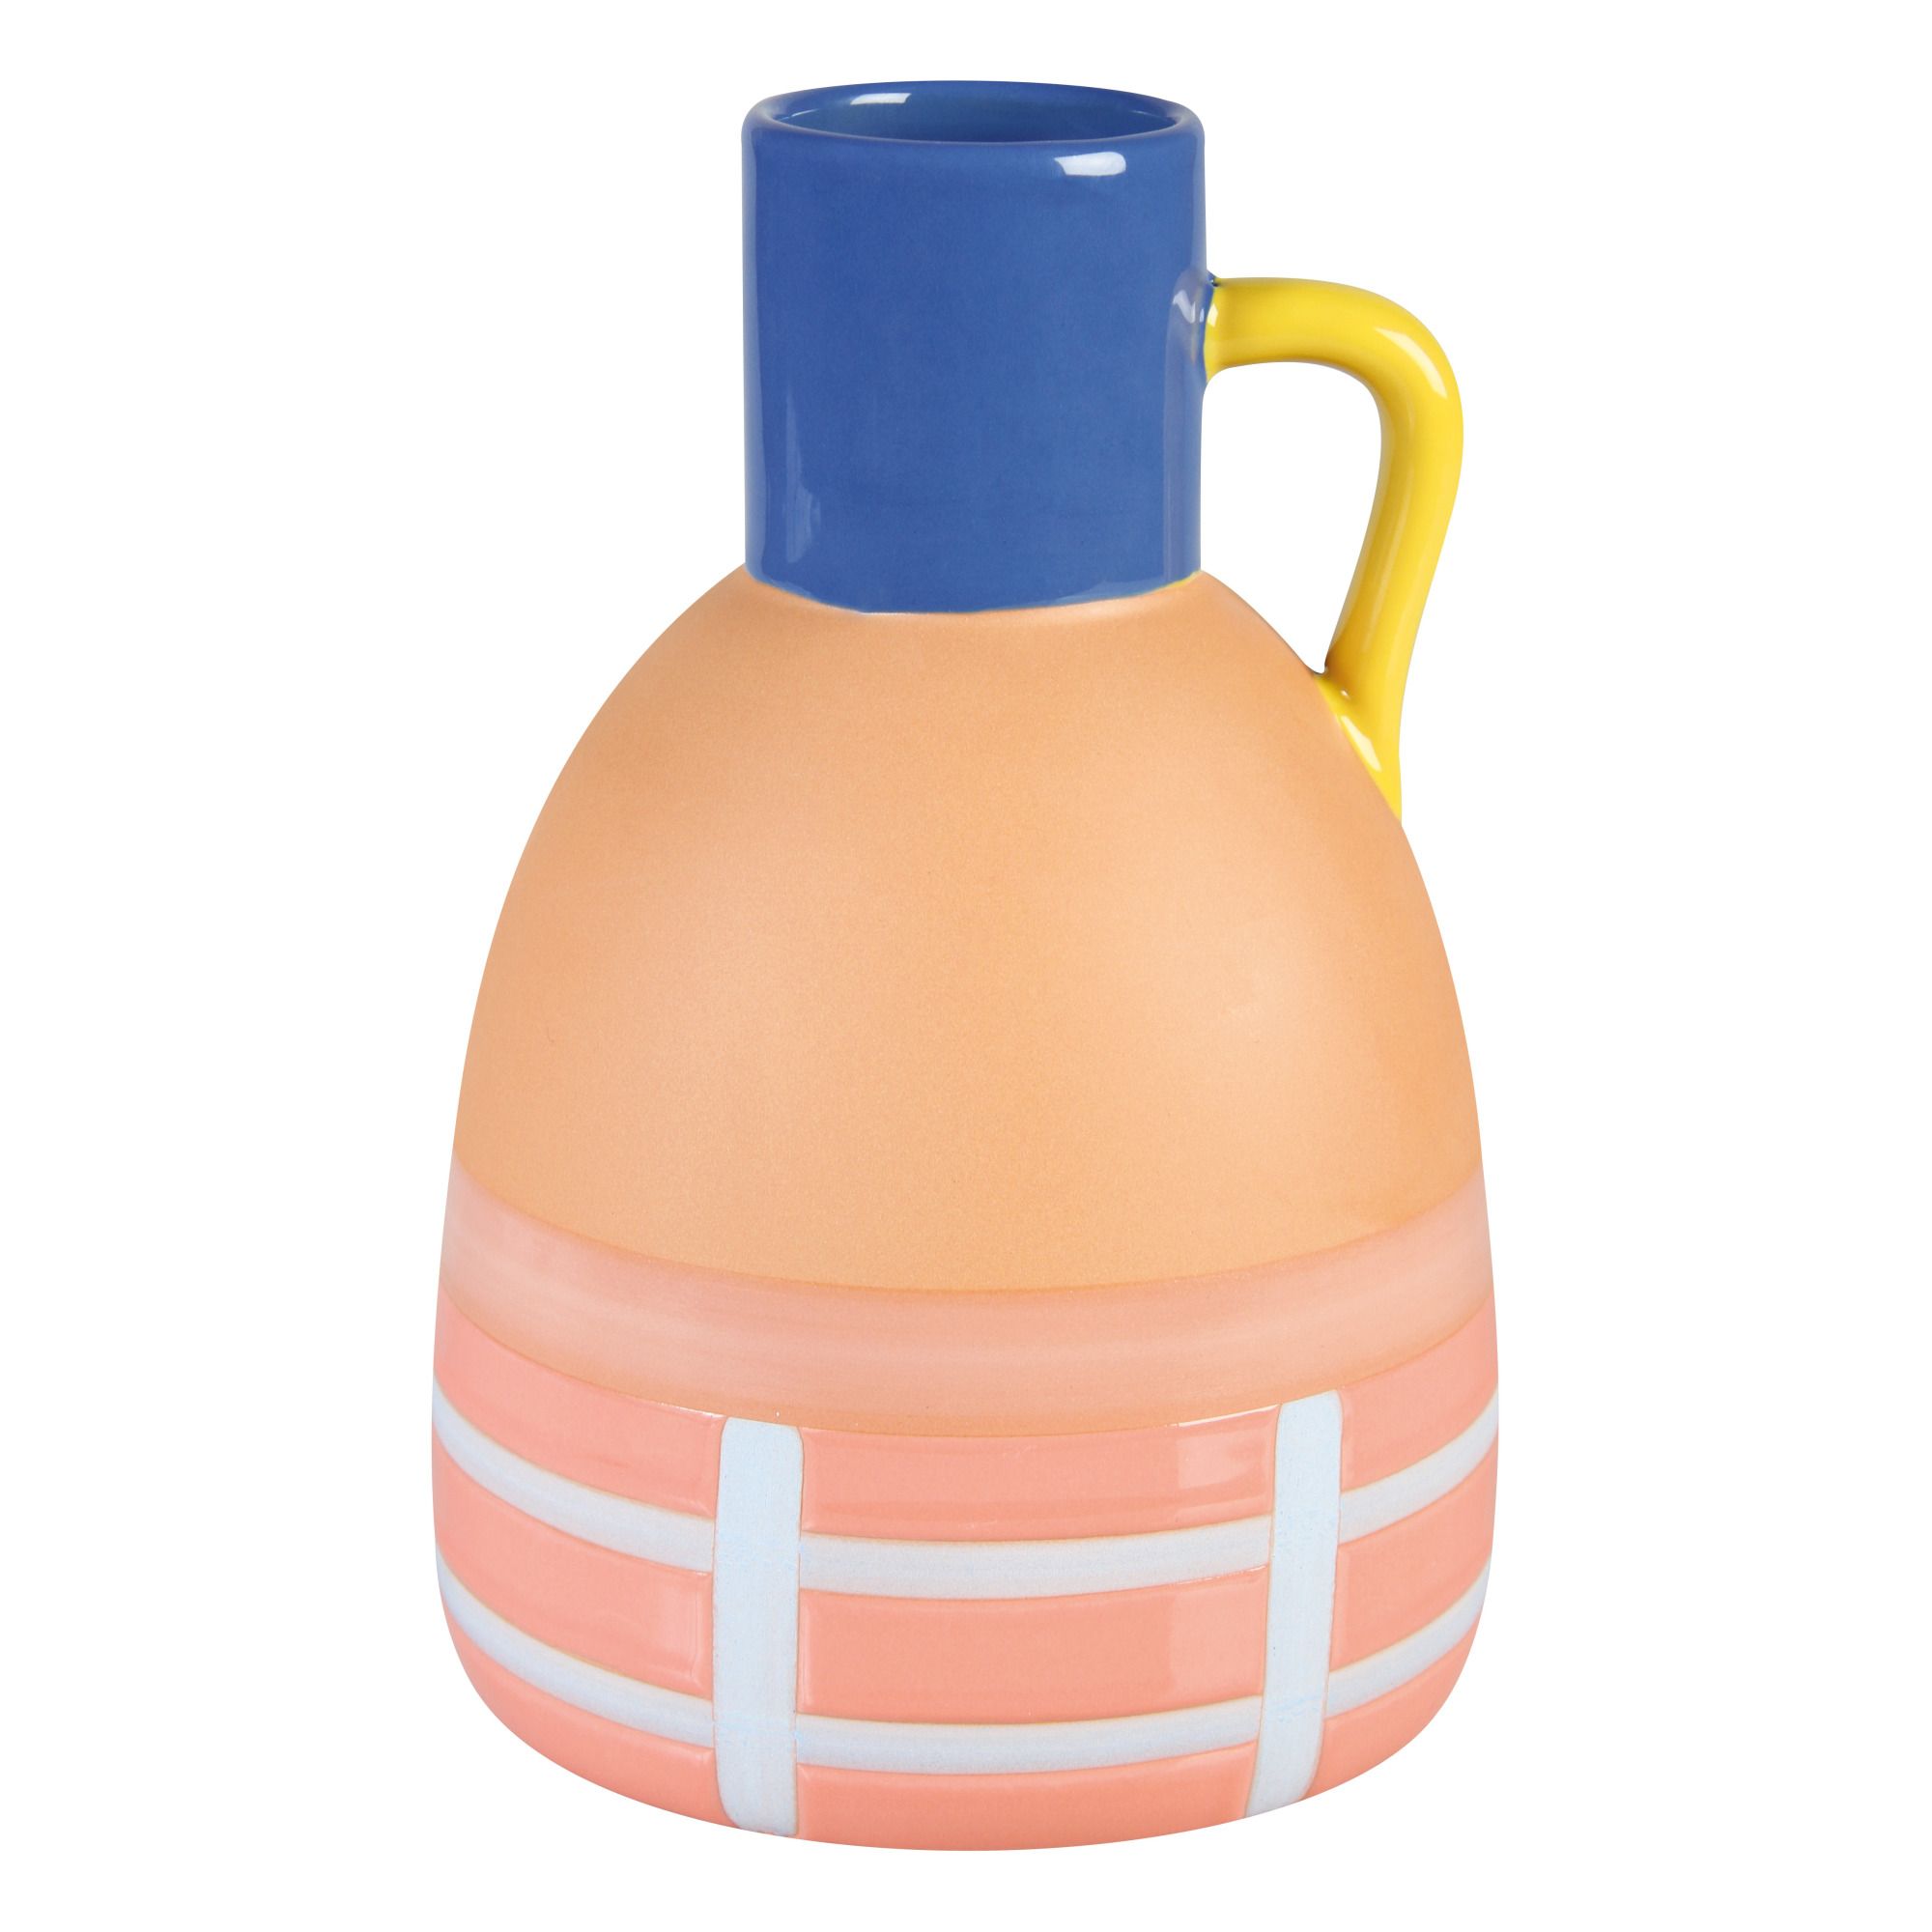 &Klevering - Vase en terracotta - Multicolore